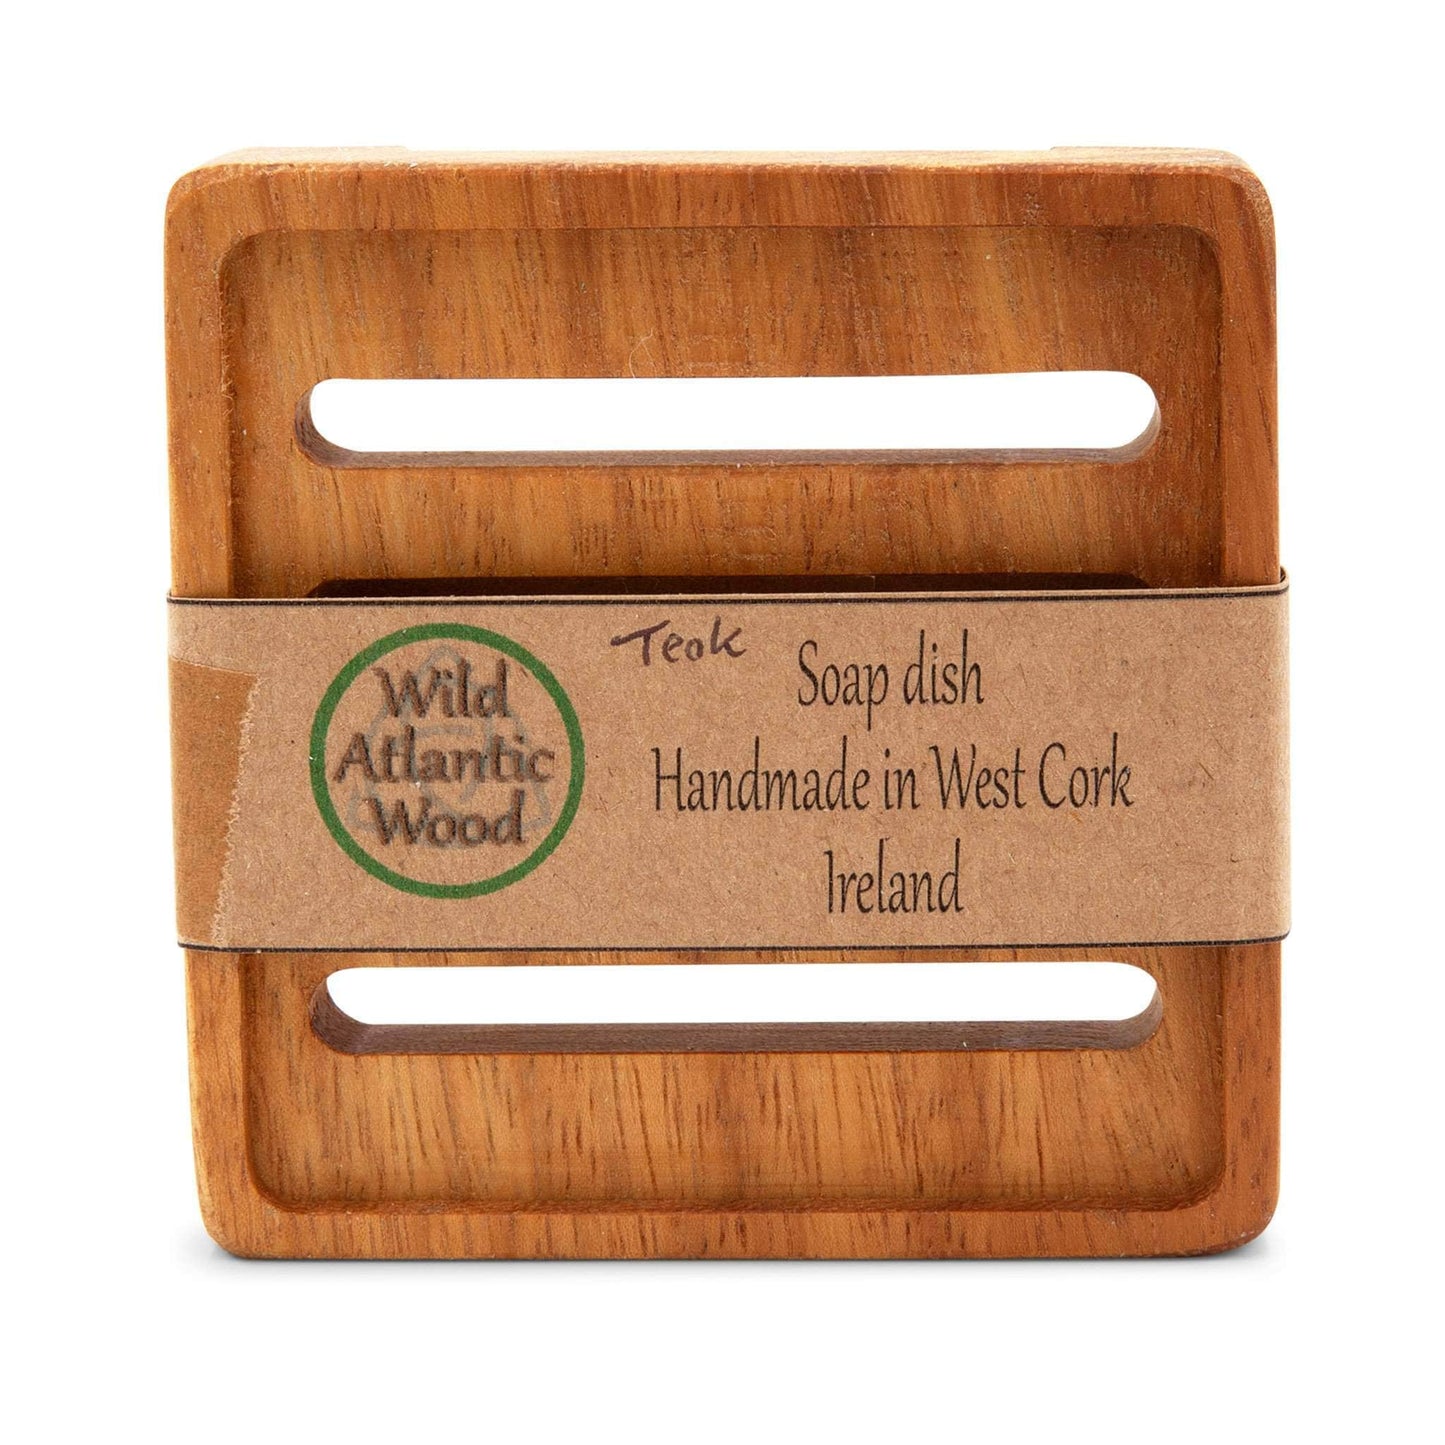 Wild Atlantic Wood Soap Dishes Wild Atlantic Wood - Self Draining Square Wooden Soap Dish - Teak